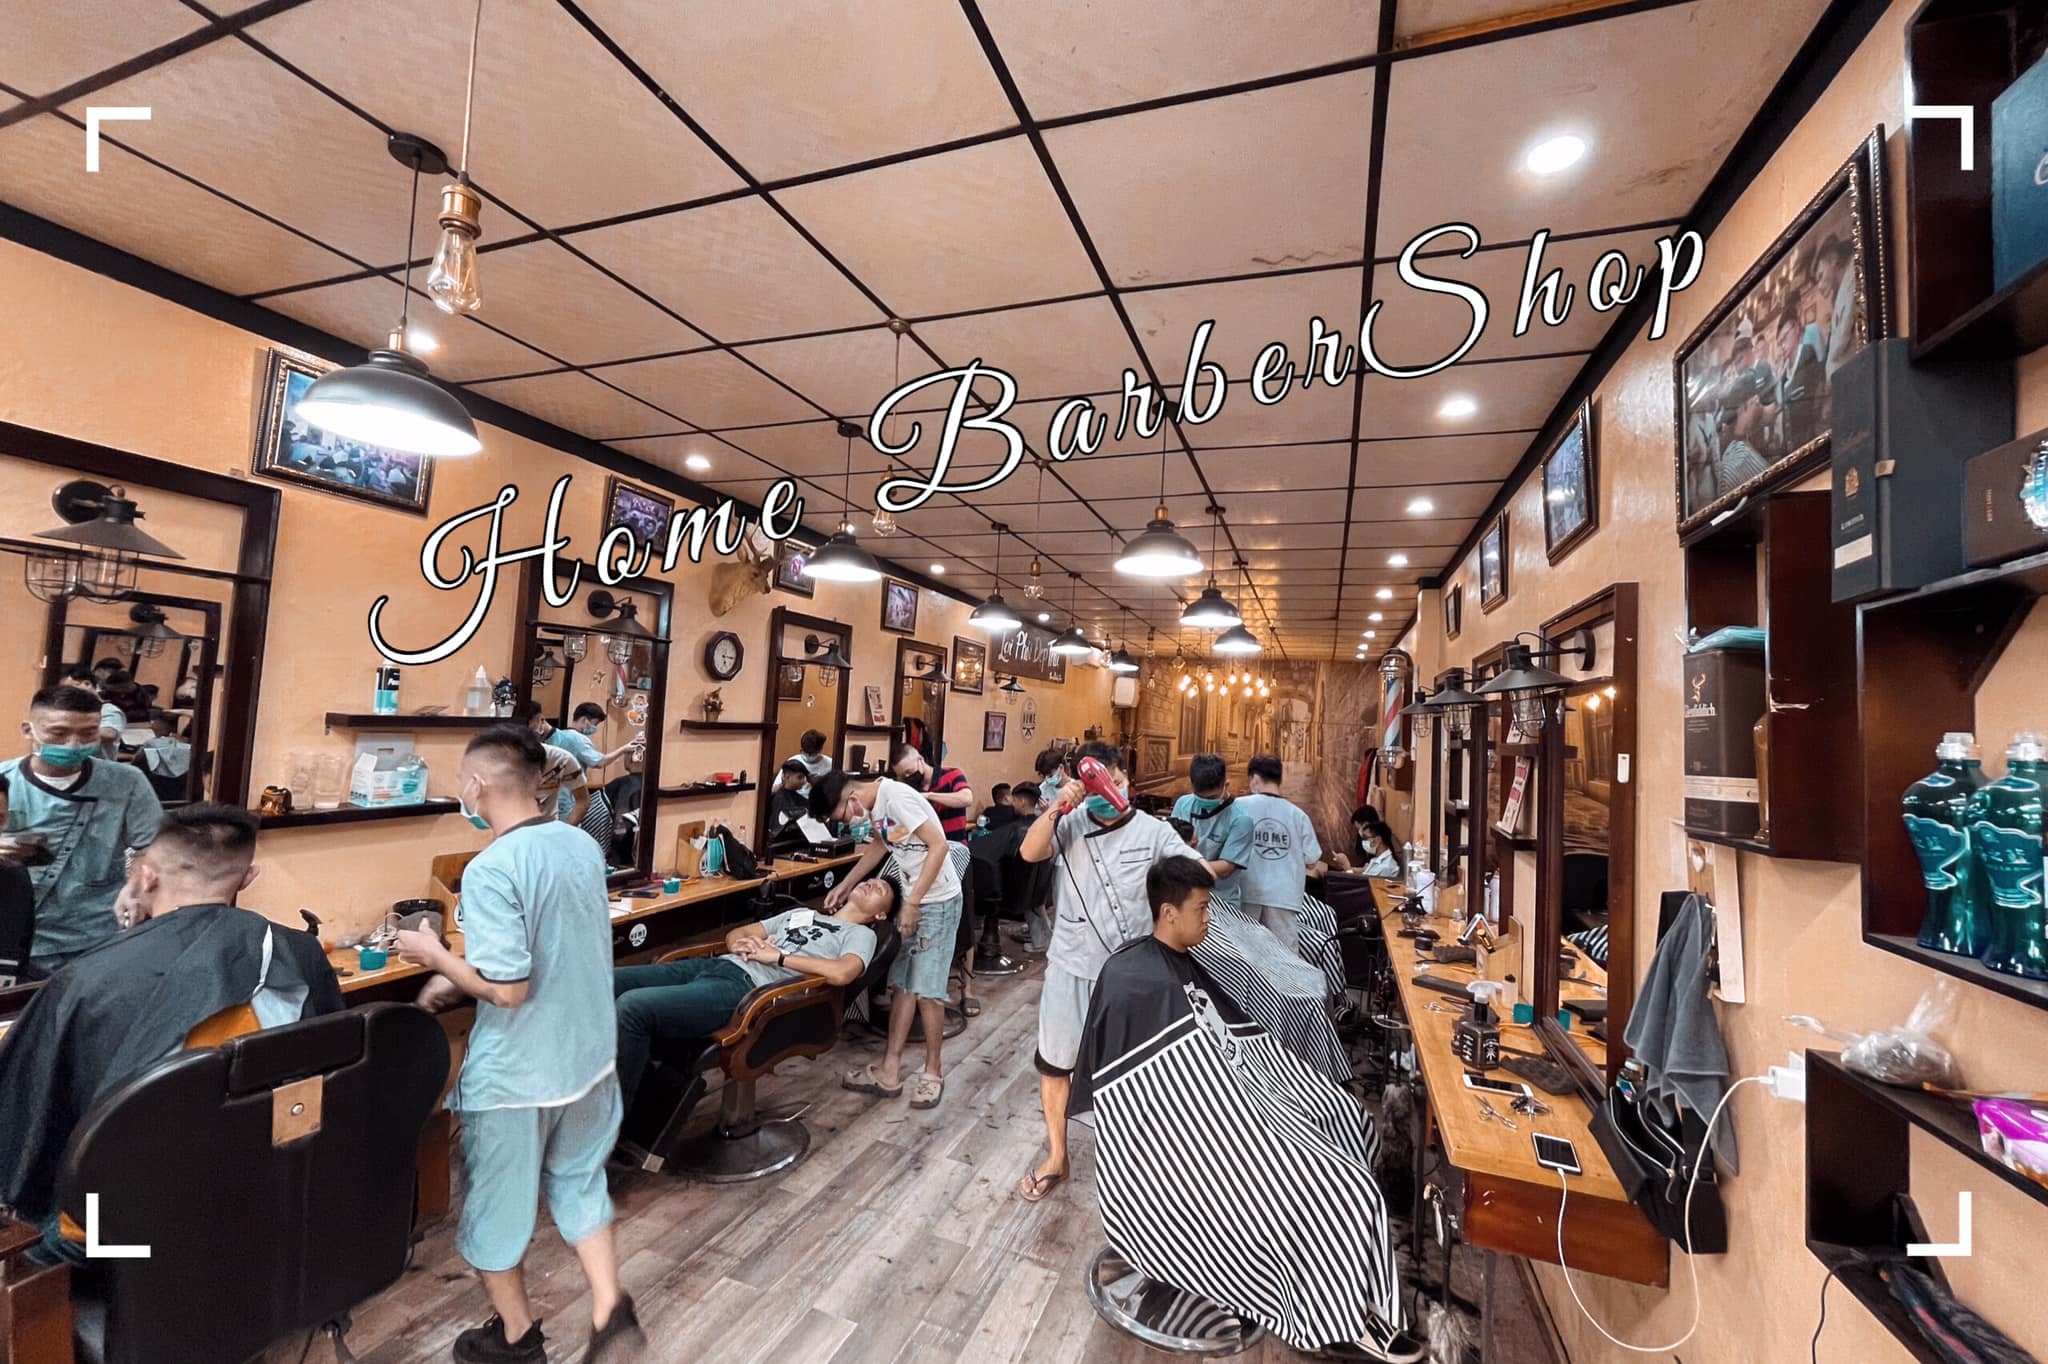 Home BarberShop ảnh 2